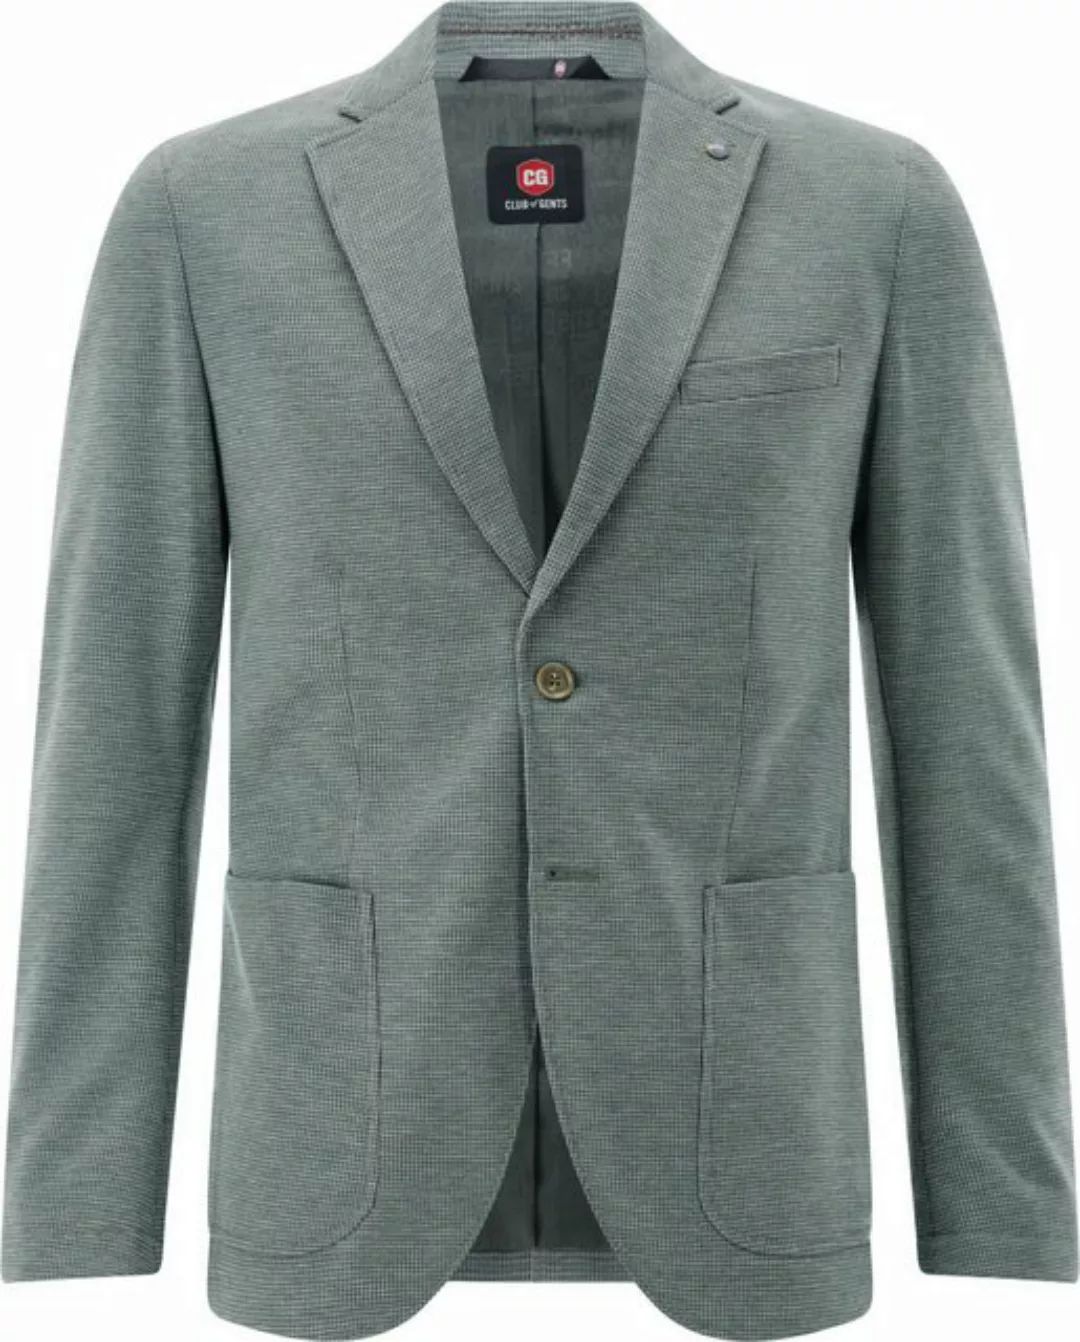 CG Club of Gents Jackenblazer Sakko/Jacket CG Cuba-J SV günstig online kaufen